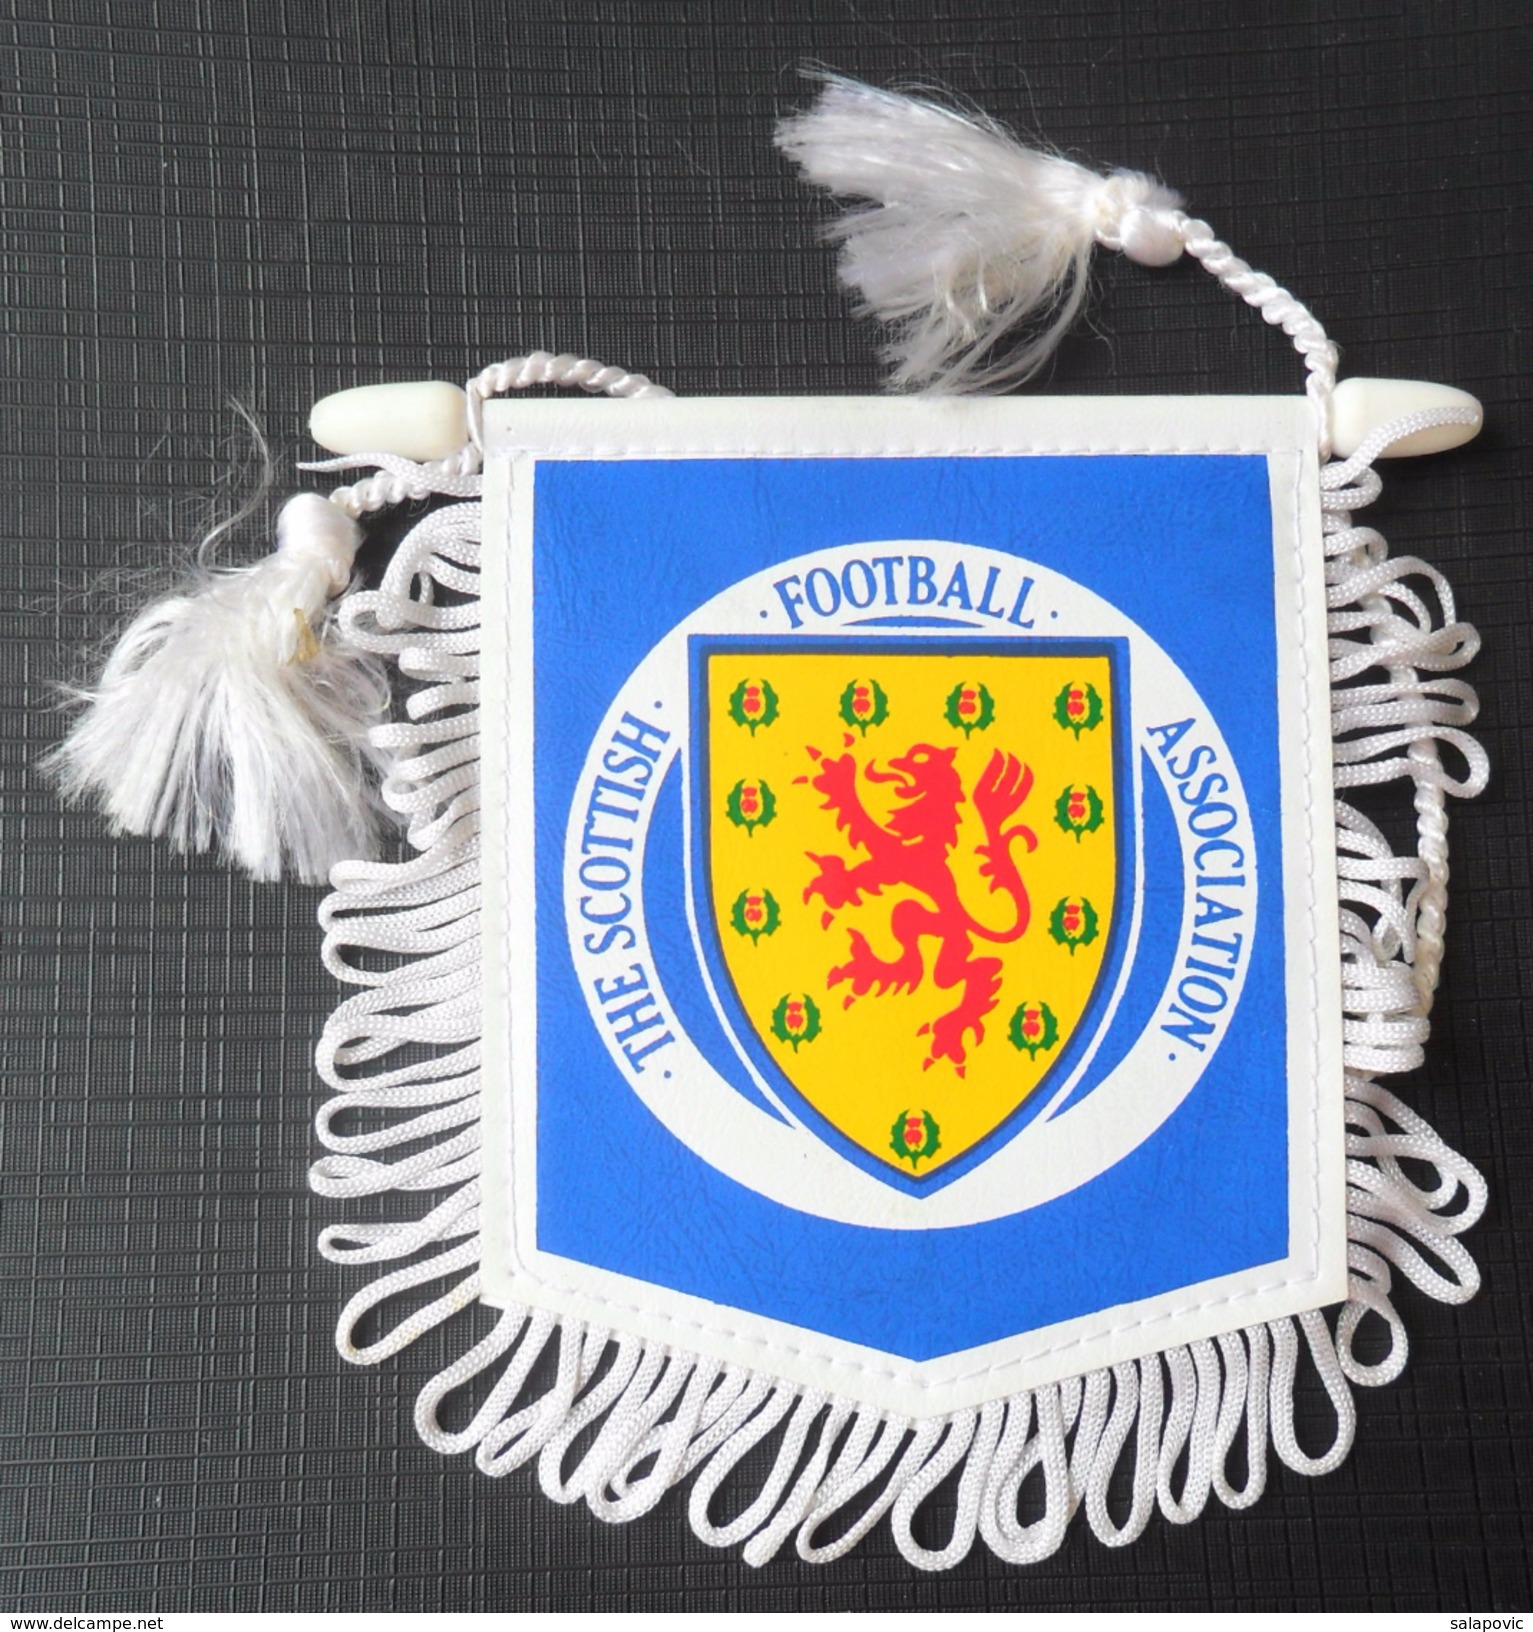 Scottish Football Association FOOTBALL CLUB, SOCCER / FUTBOL / CALCIO OLD PENNANT, SPORTS FLAG - Abbigliamento, Souvenirs & Varie